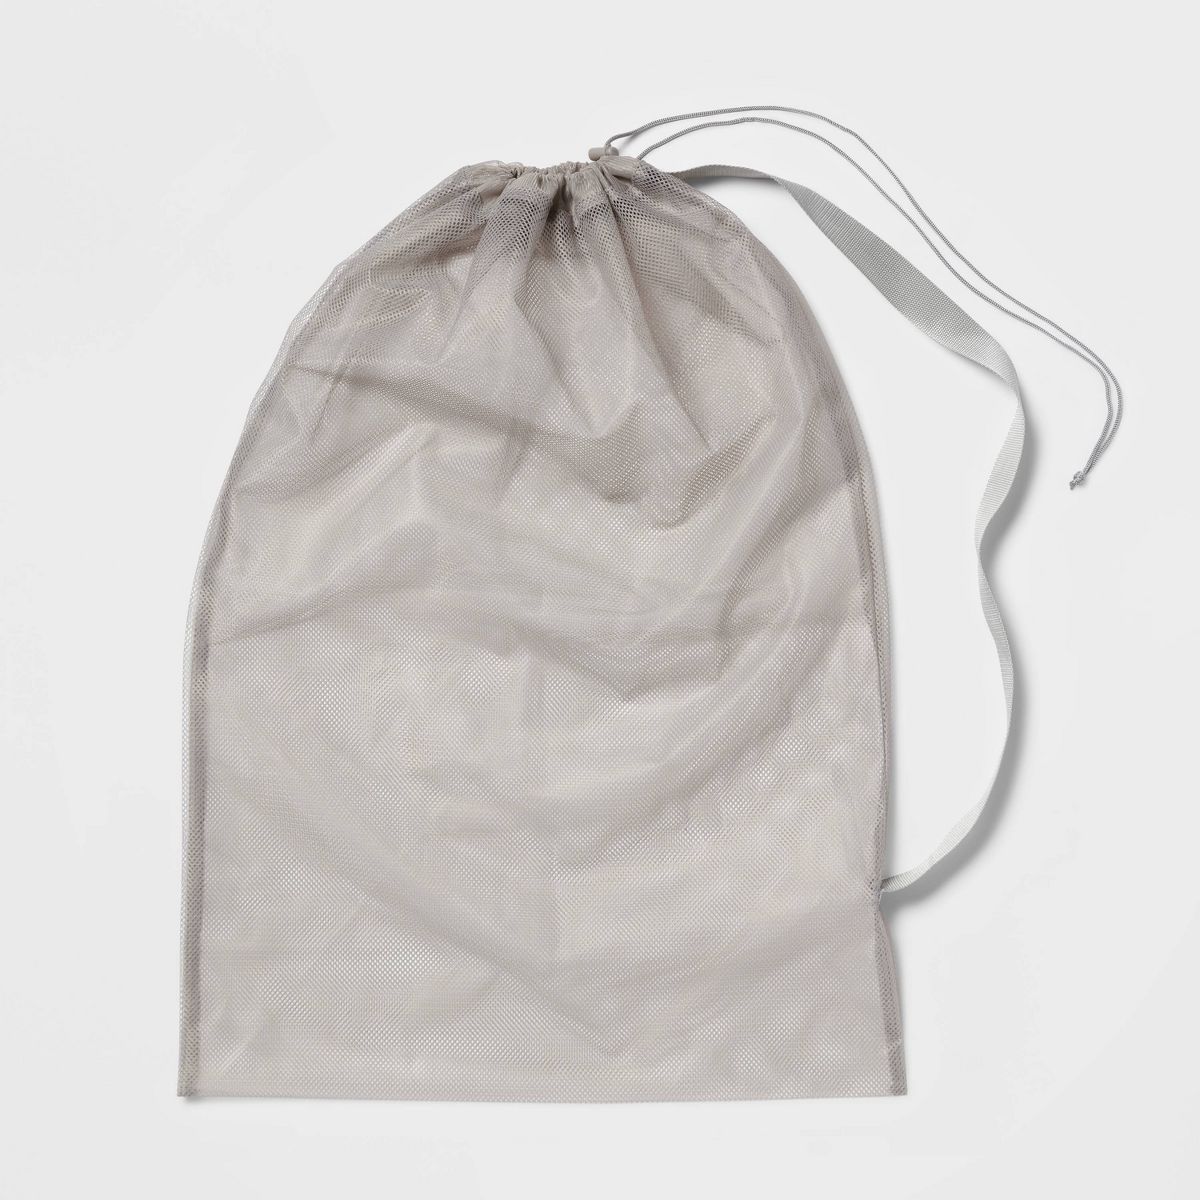 Mesh Laundry Bag Gray - Brightroom™ | Target